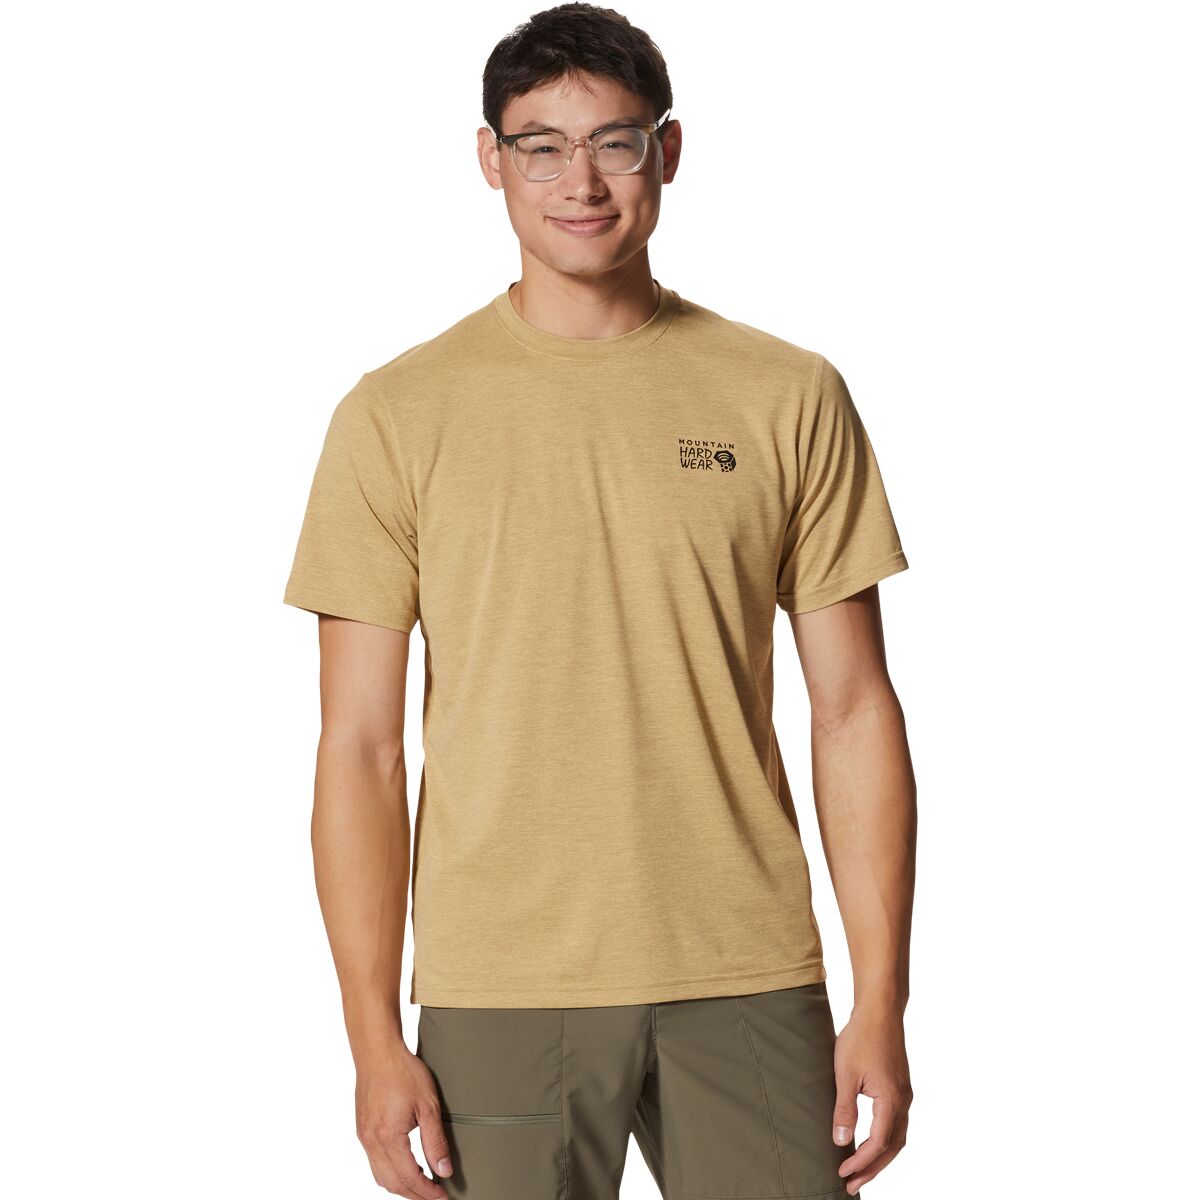 Sunblocker Short-Sleeve Shirt - Men